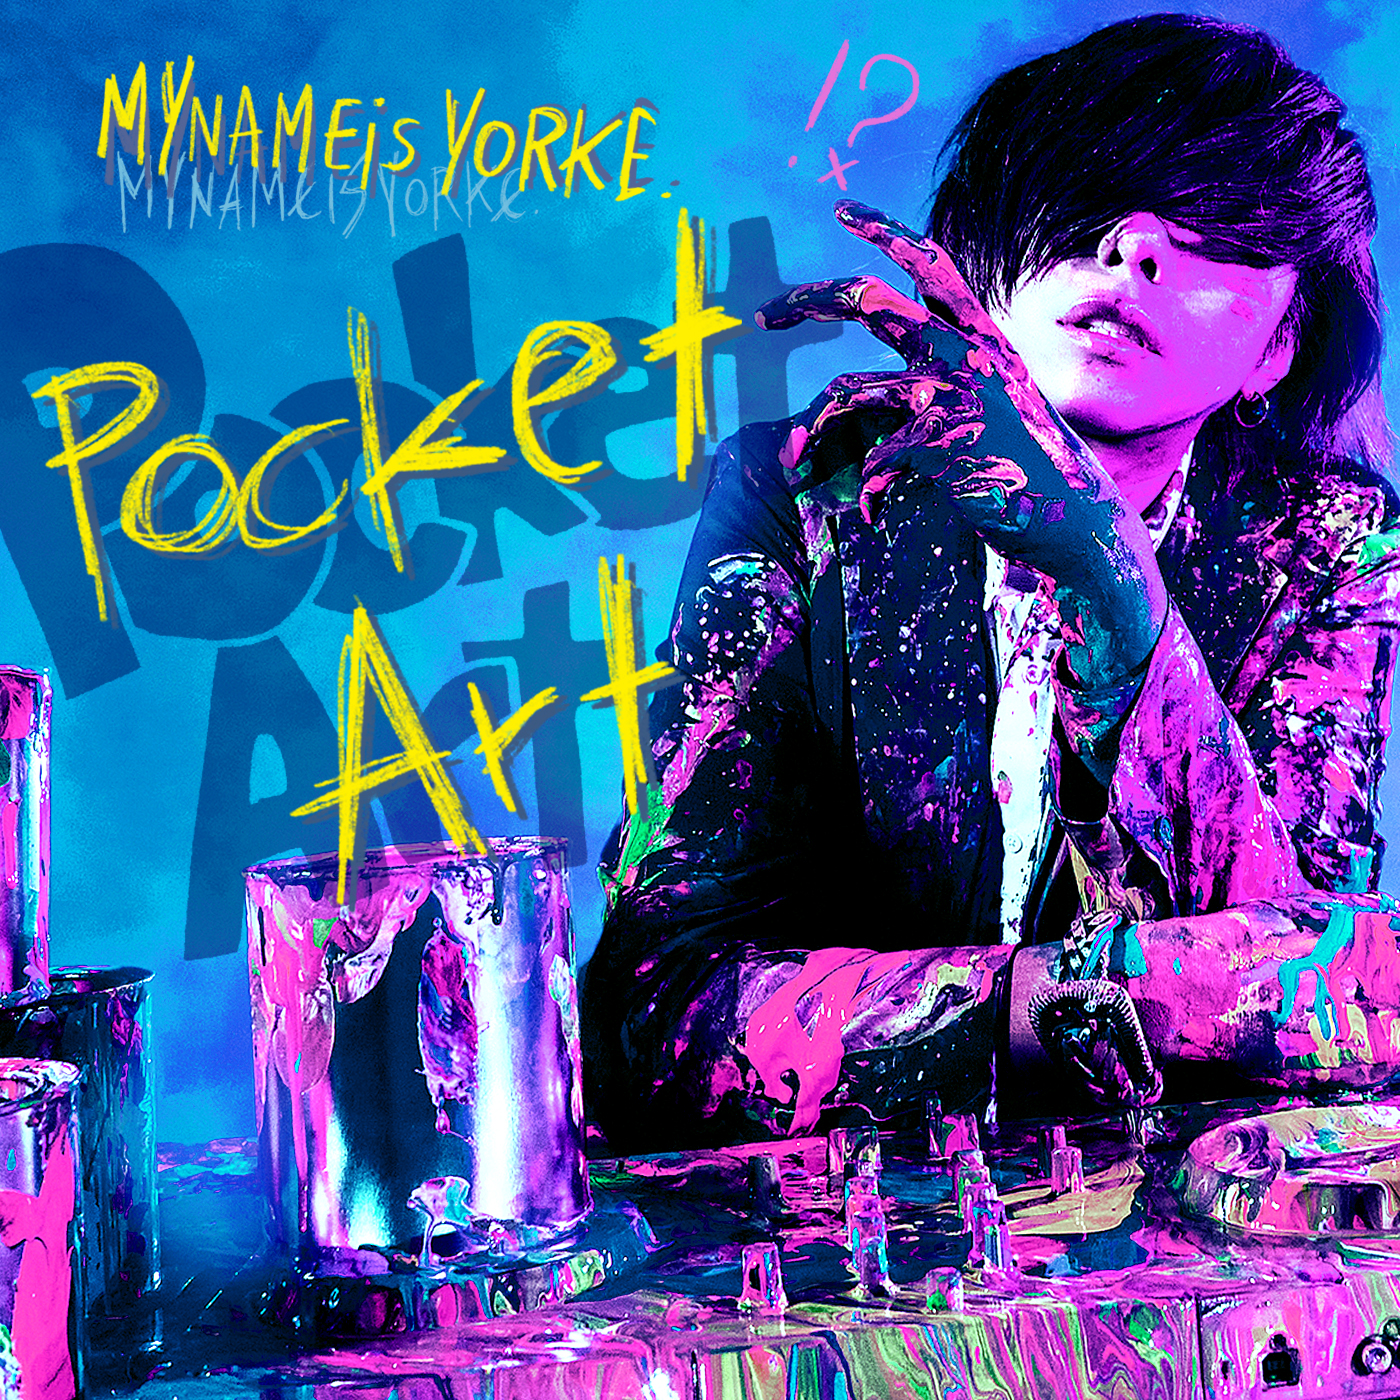 #85 YORKE. Pocket Art【アート展「Brand New Edge」を振り返ってみる】